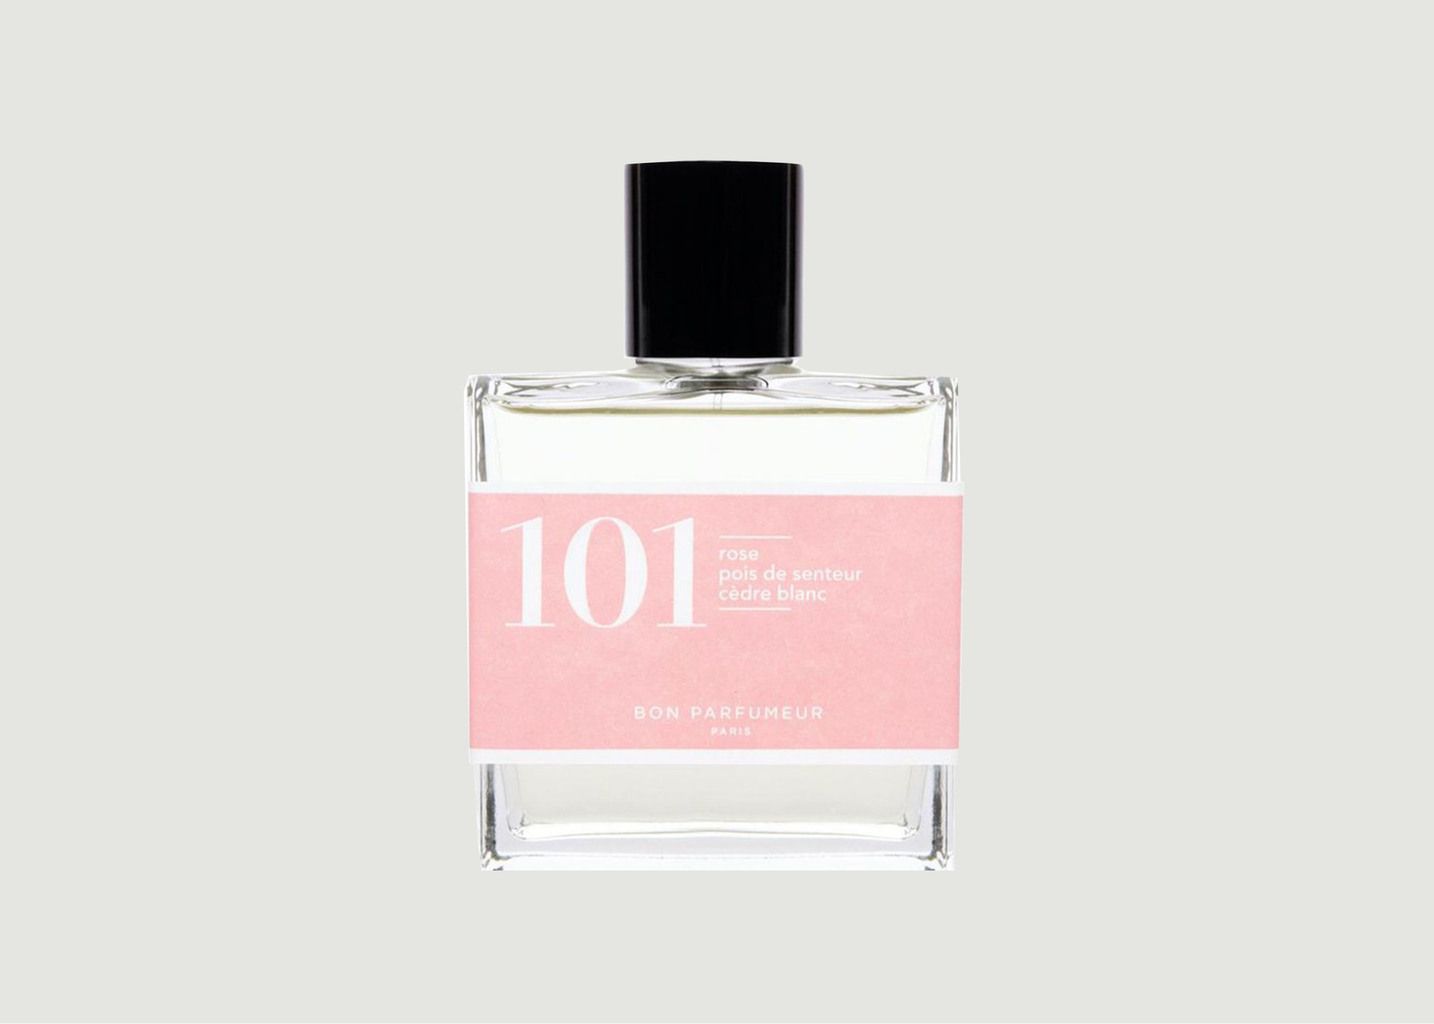 Eau de Parfum 101: Rose, Edelwicke, Weiße Zeder - Bon Parfumeur